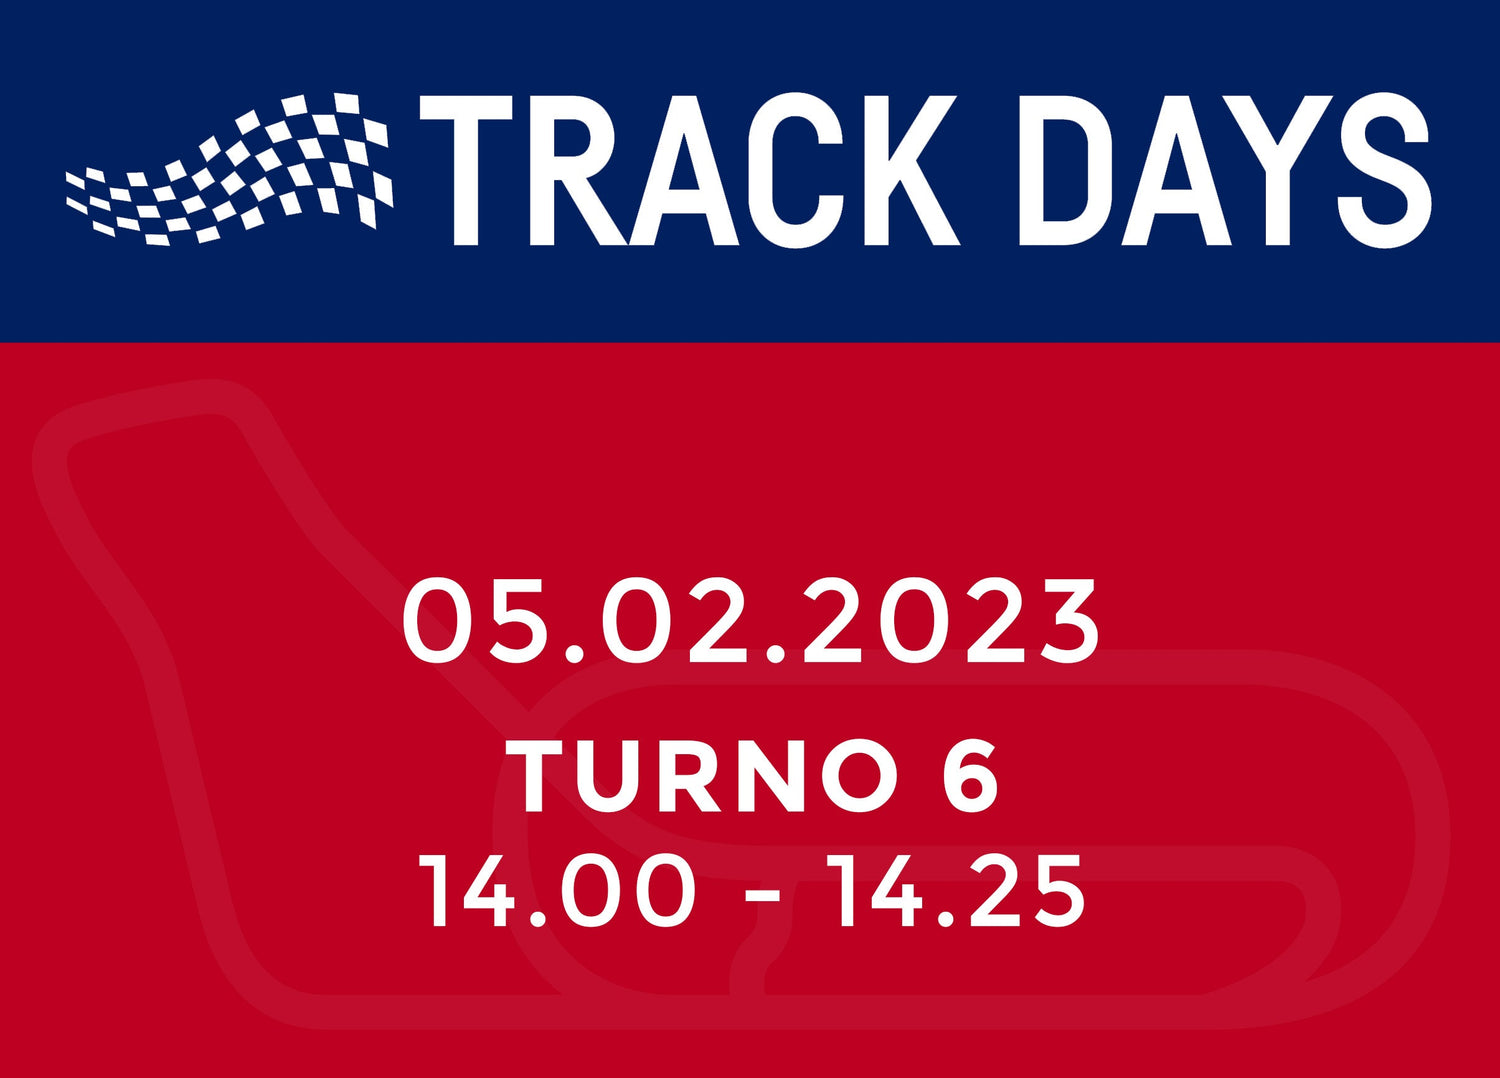 TRACK DAYS 05.02.23 TURNO 6